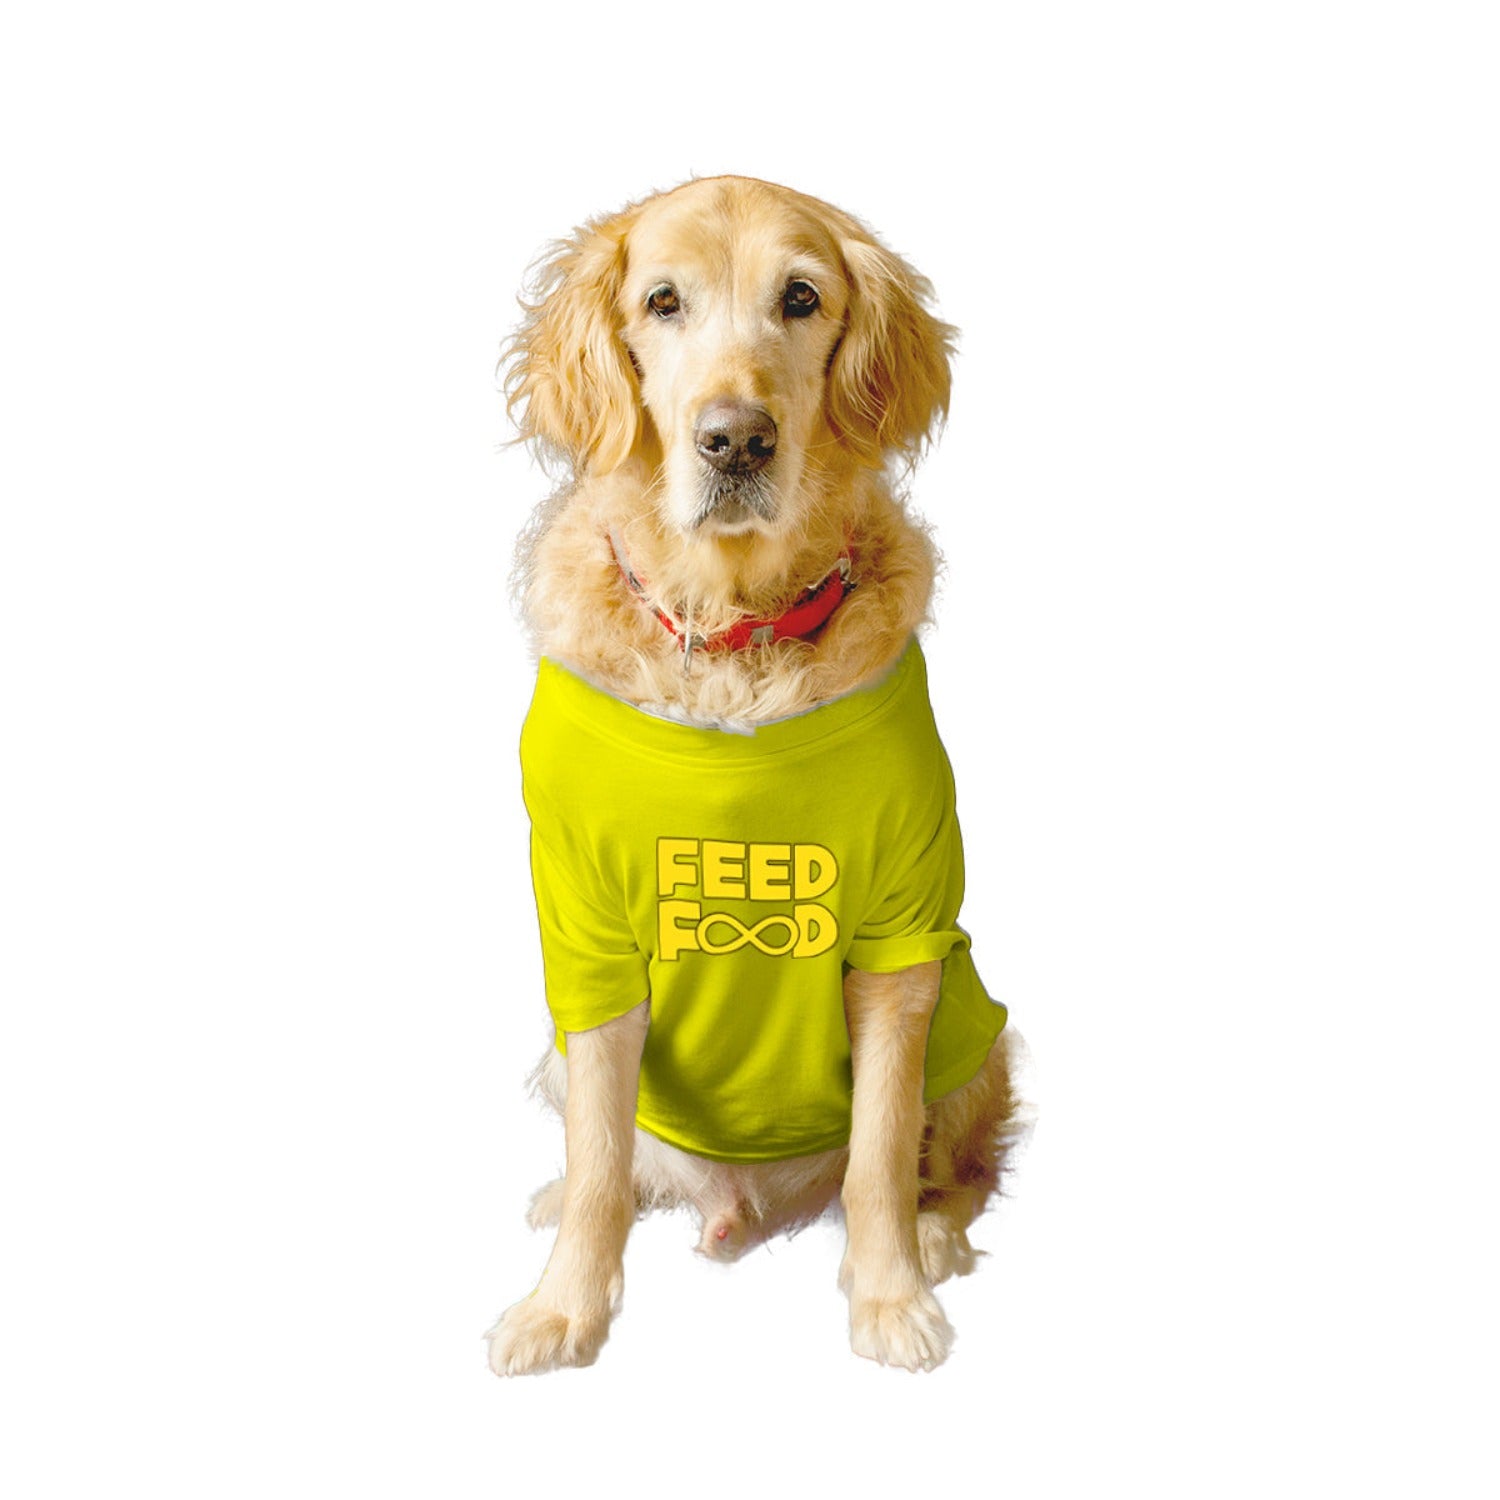 Ruse XX-Small (Chihuahuas, Papillons) / Yellow Ruse Basic Crew Neck "Feed Food" Printed Half Sleeves Dog Tee